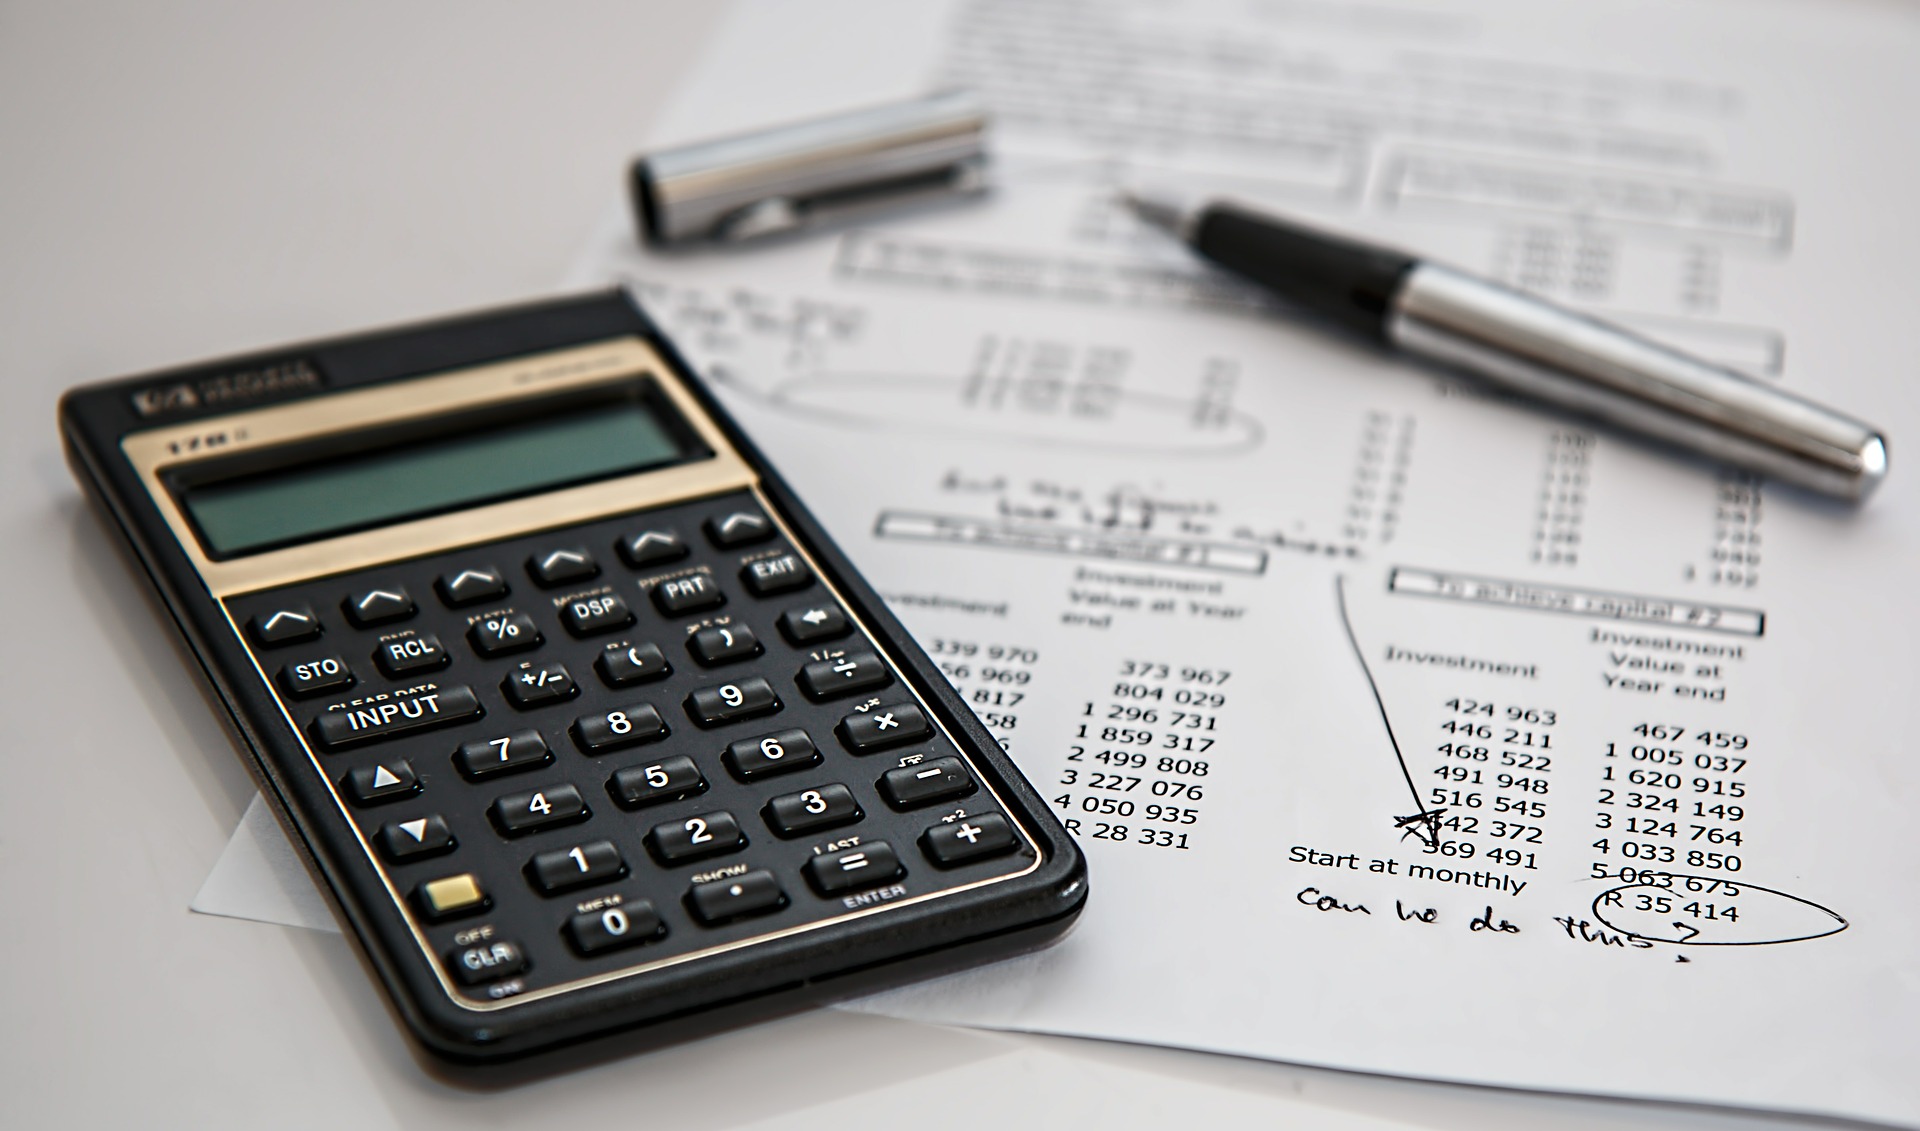 a black calculator, pen, and budget sheet